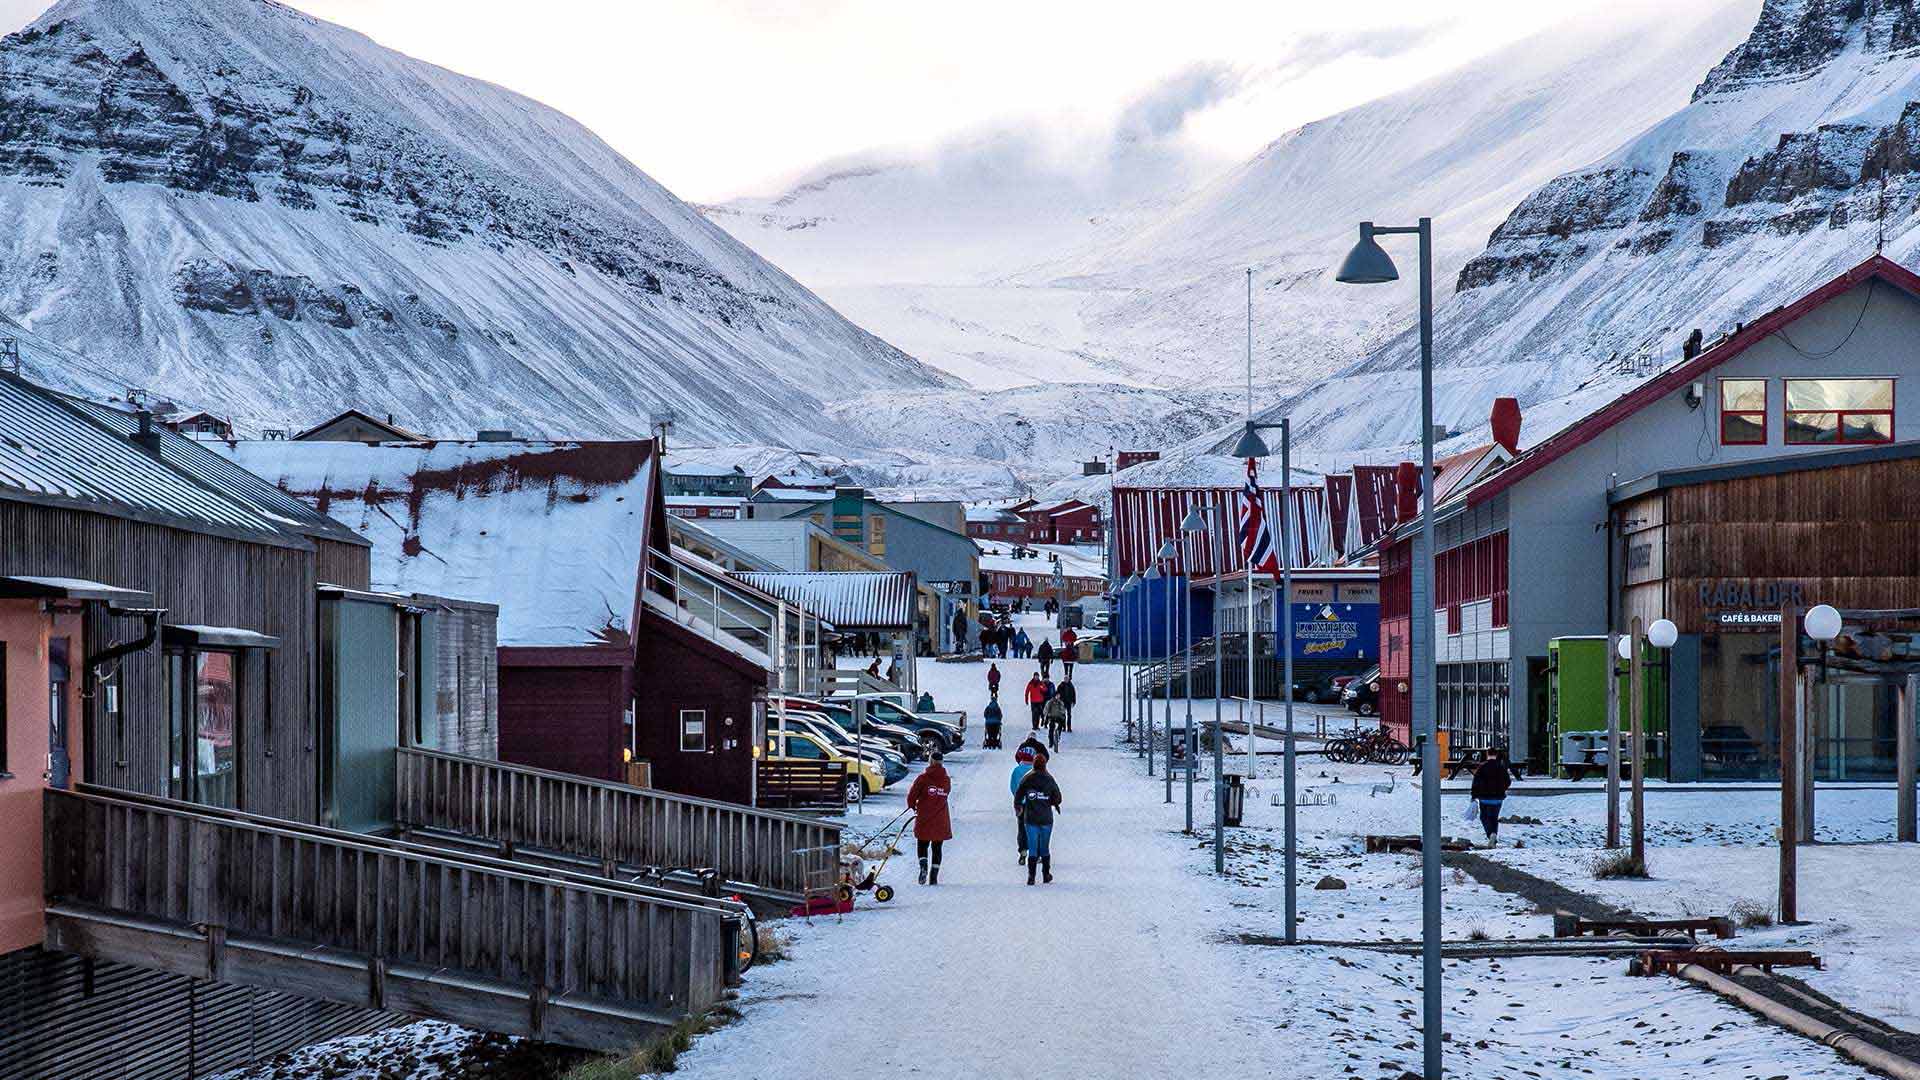 The main street in Longyearbyen ©nordnorge.com / Jarle Roessland